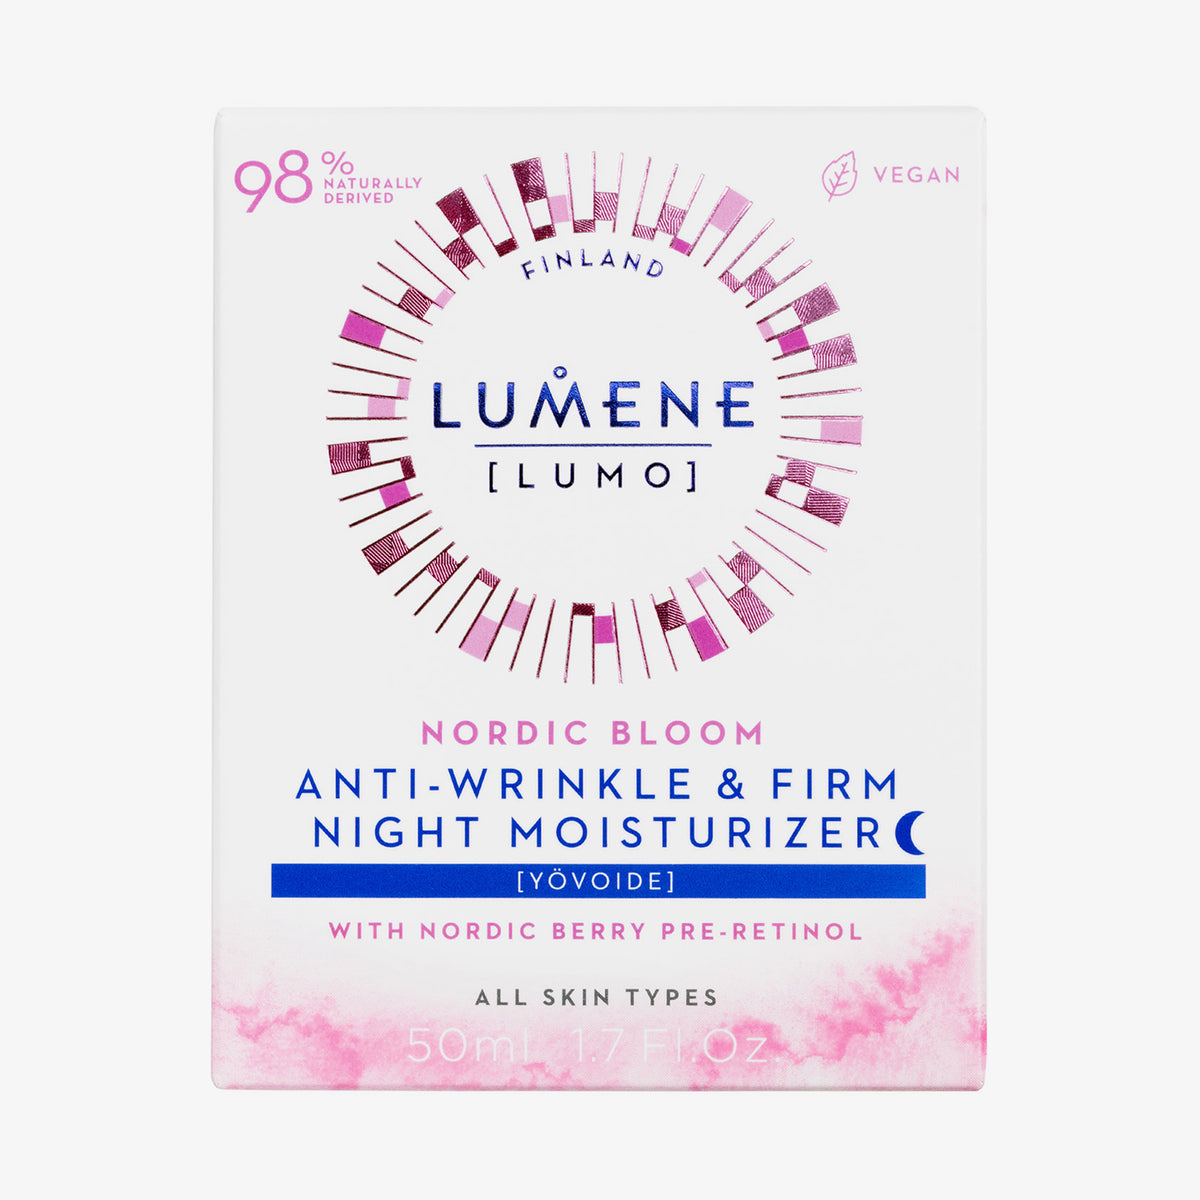 Lumene | NORDIC BLOOM [LUMO] Anti-wrinkle & Firm Night Moisturizer